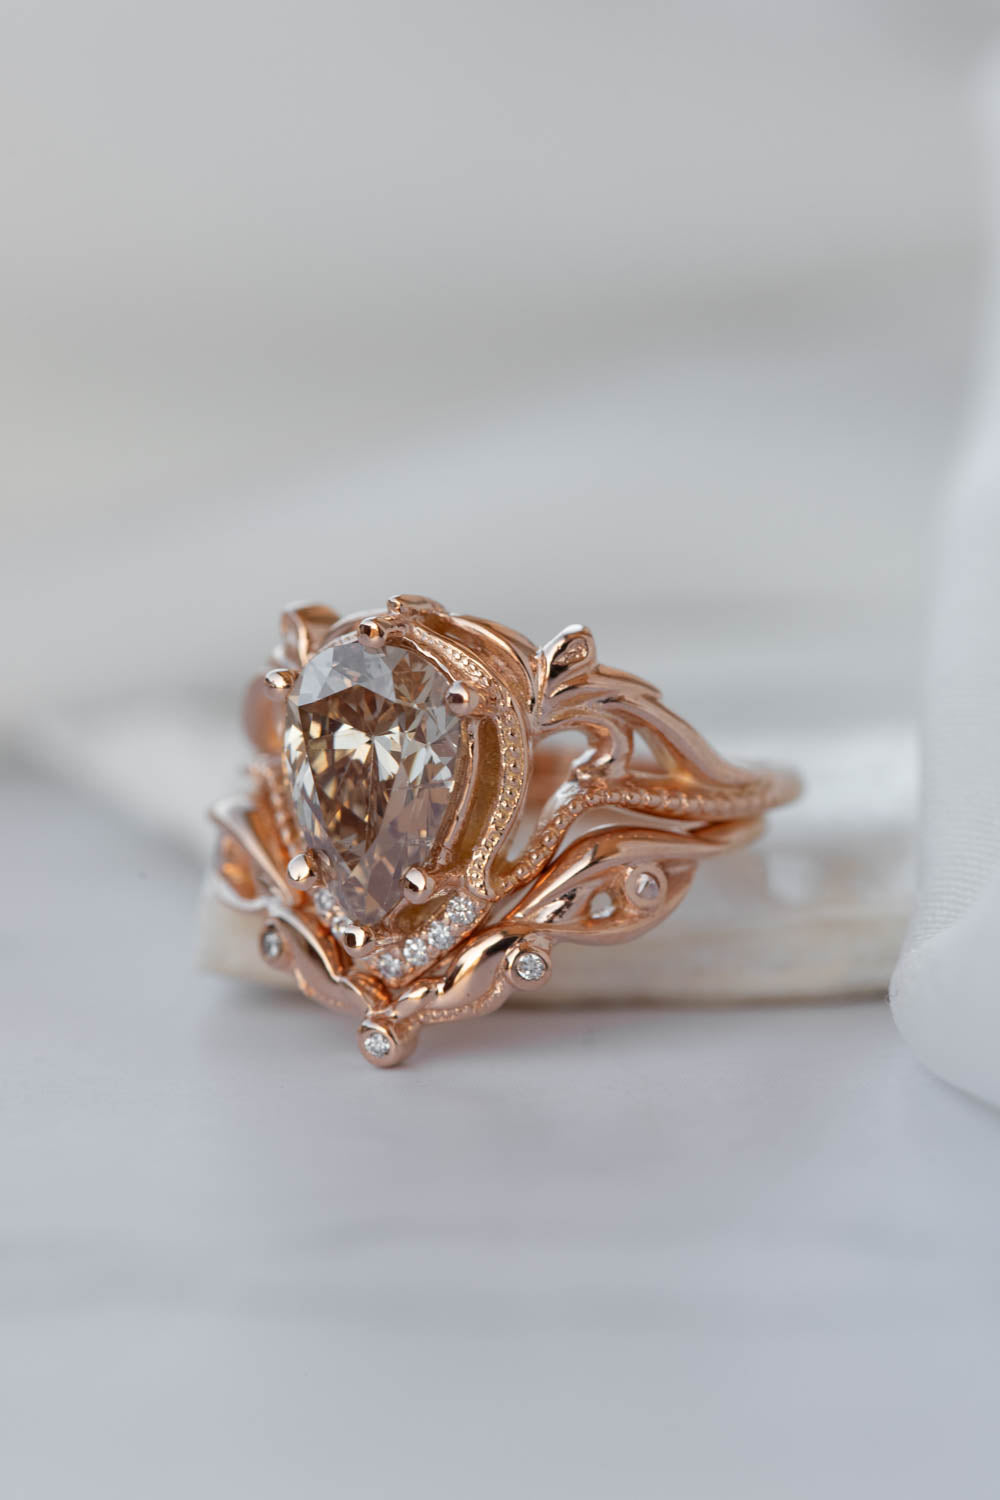 Champagne diamond rose gold engagement ring set, vintage inspired bridal ring set with diamonds / Lida - Eden Garden Jewelry™